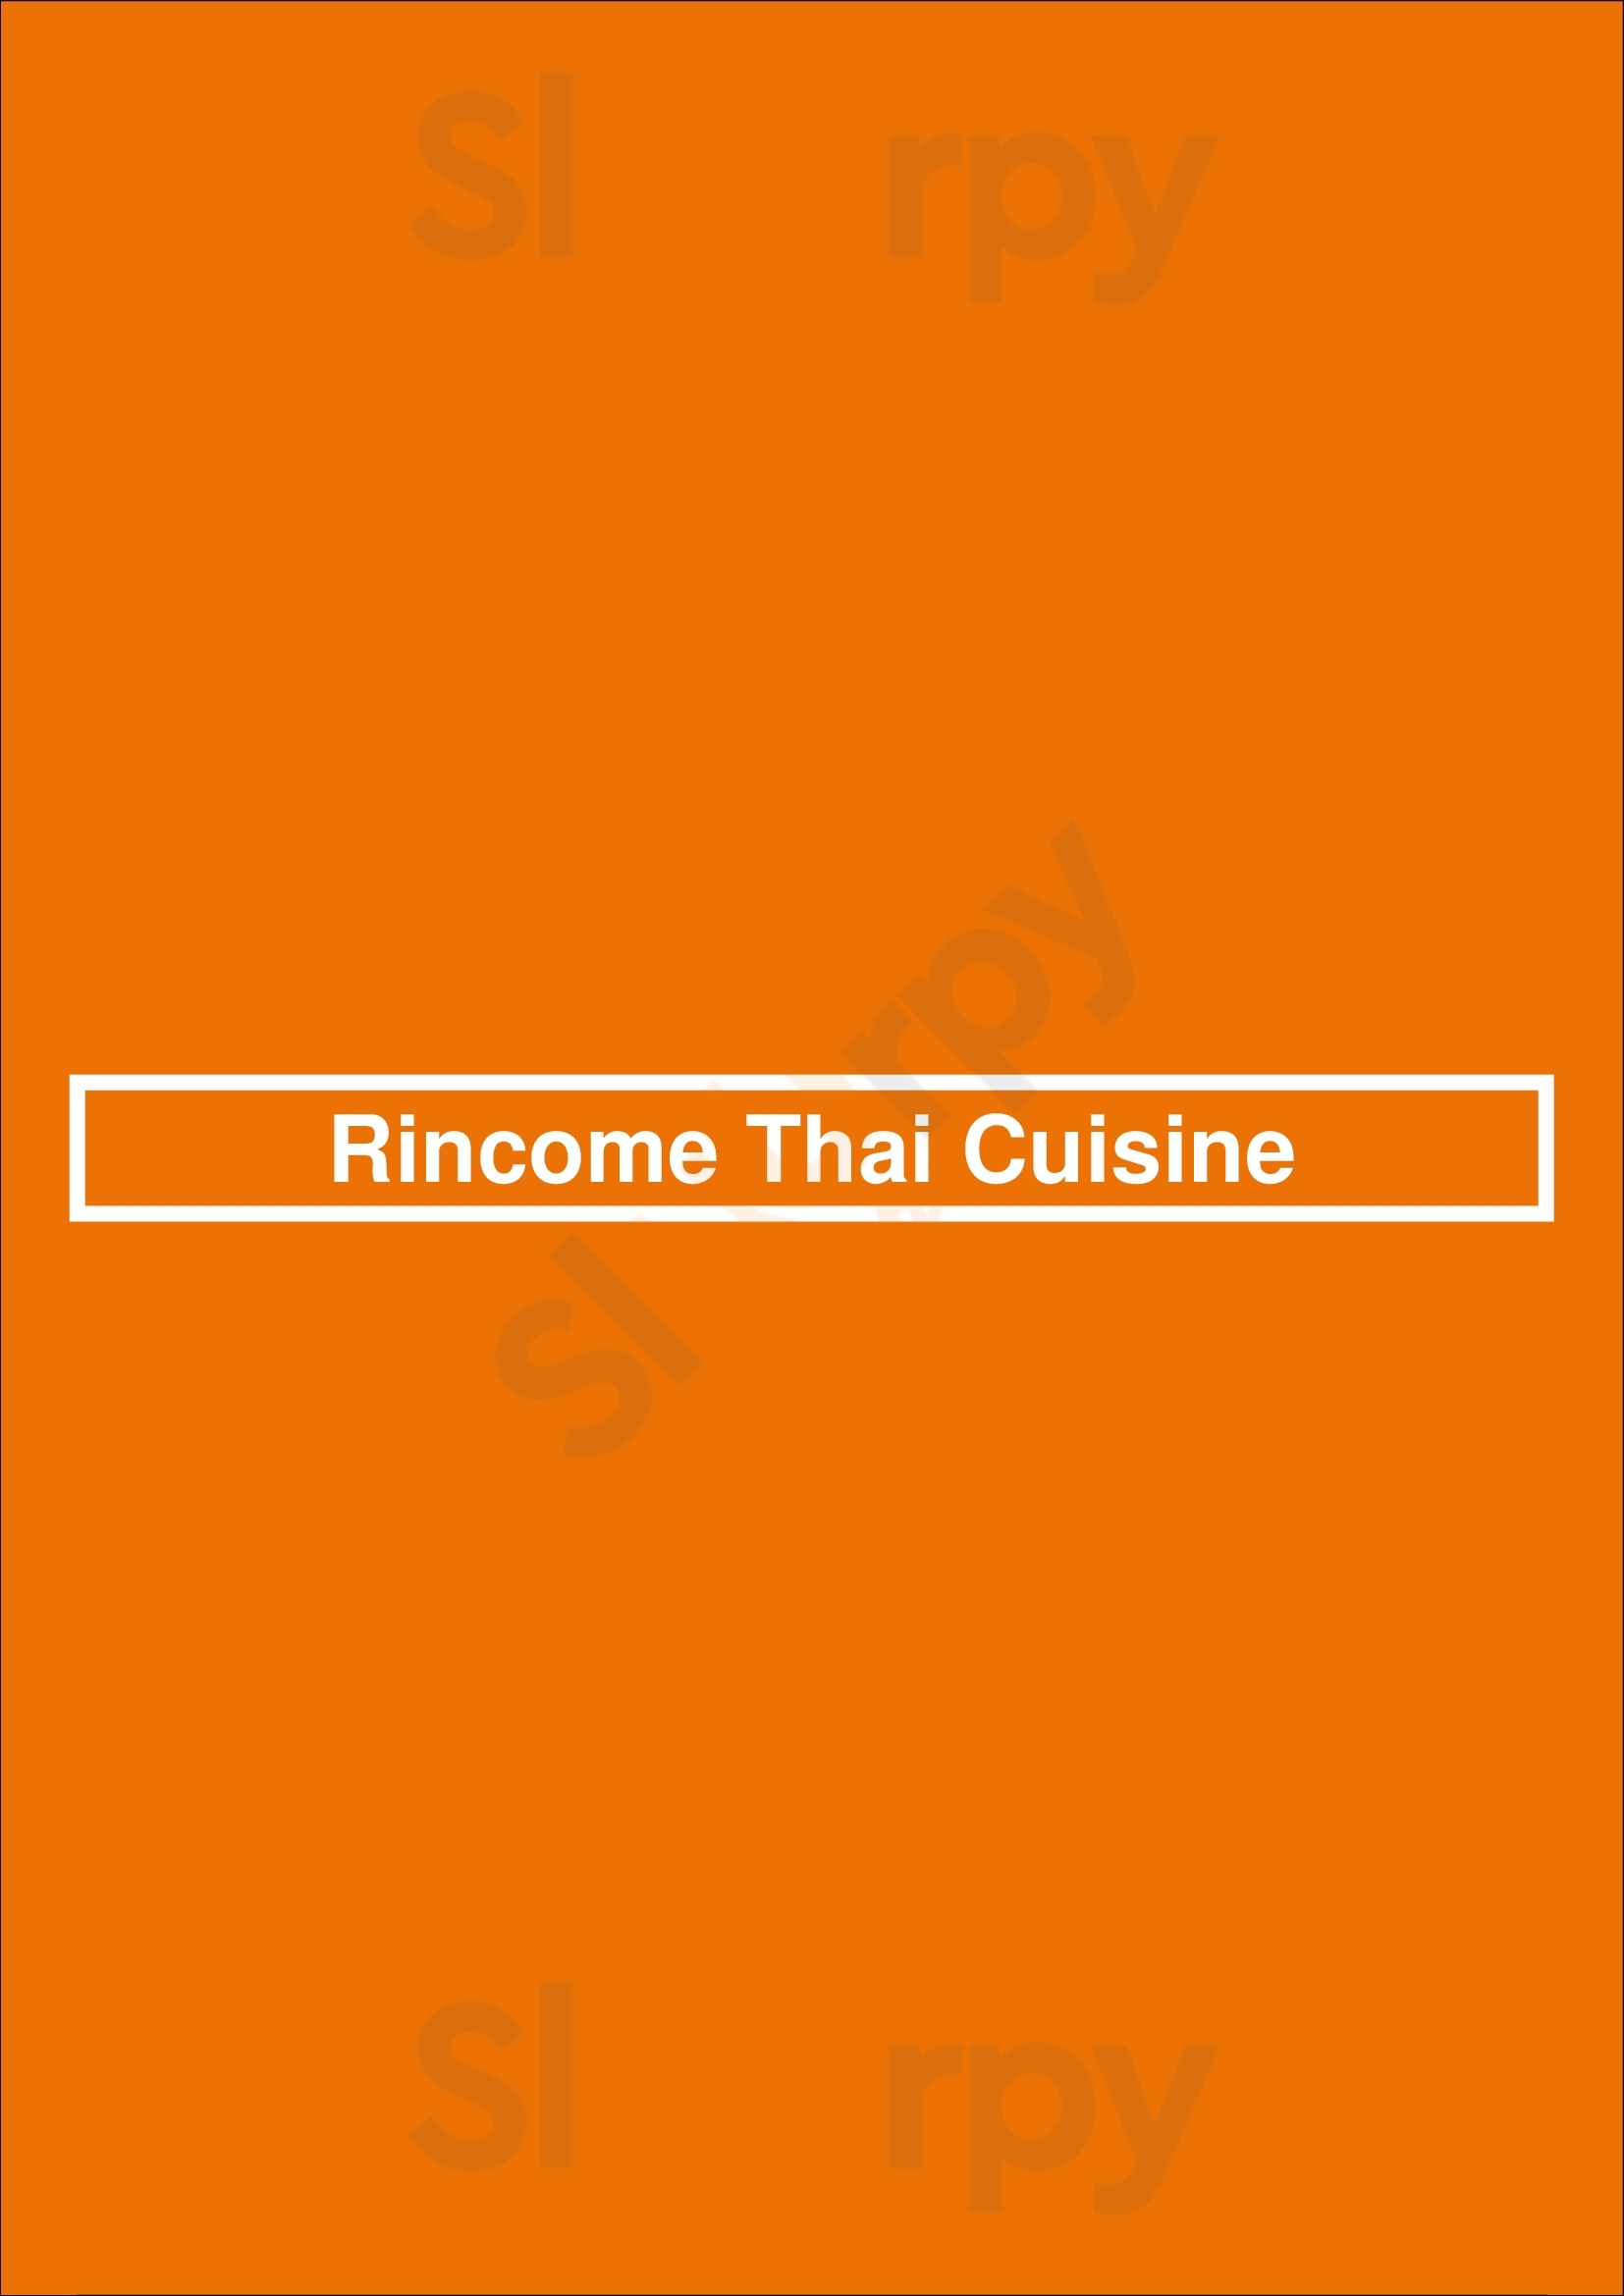 Rincome Thai Cuisine Arlington Menu - 1